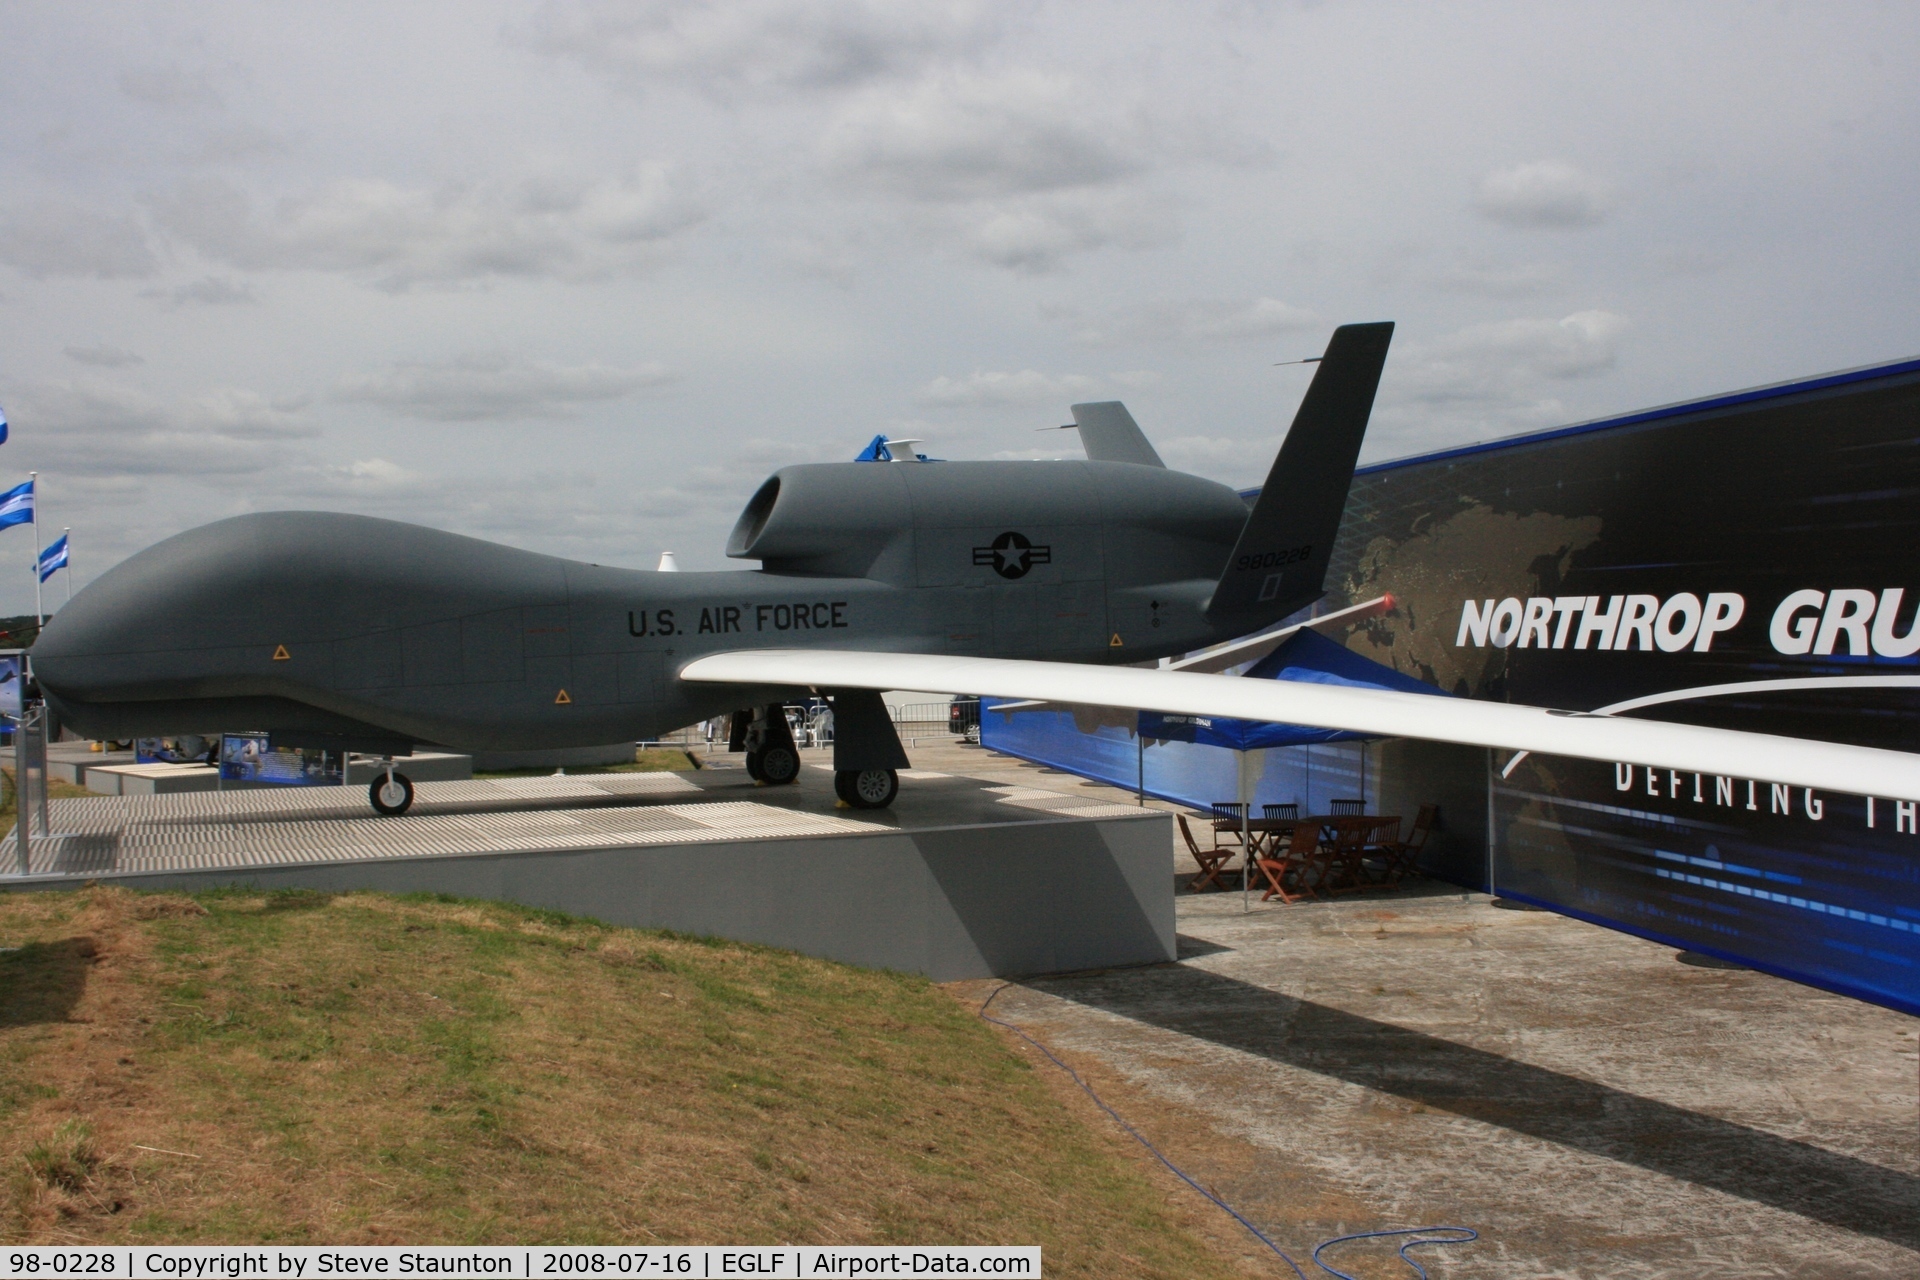 98-0228, 1998 Northrop Grumman RQ-4 Global Hawk C/N Not found 98-0228, Taken at Farnborough Airshow on the Wednesday trade day, 16th July 2009